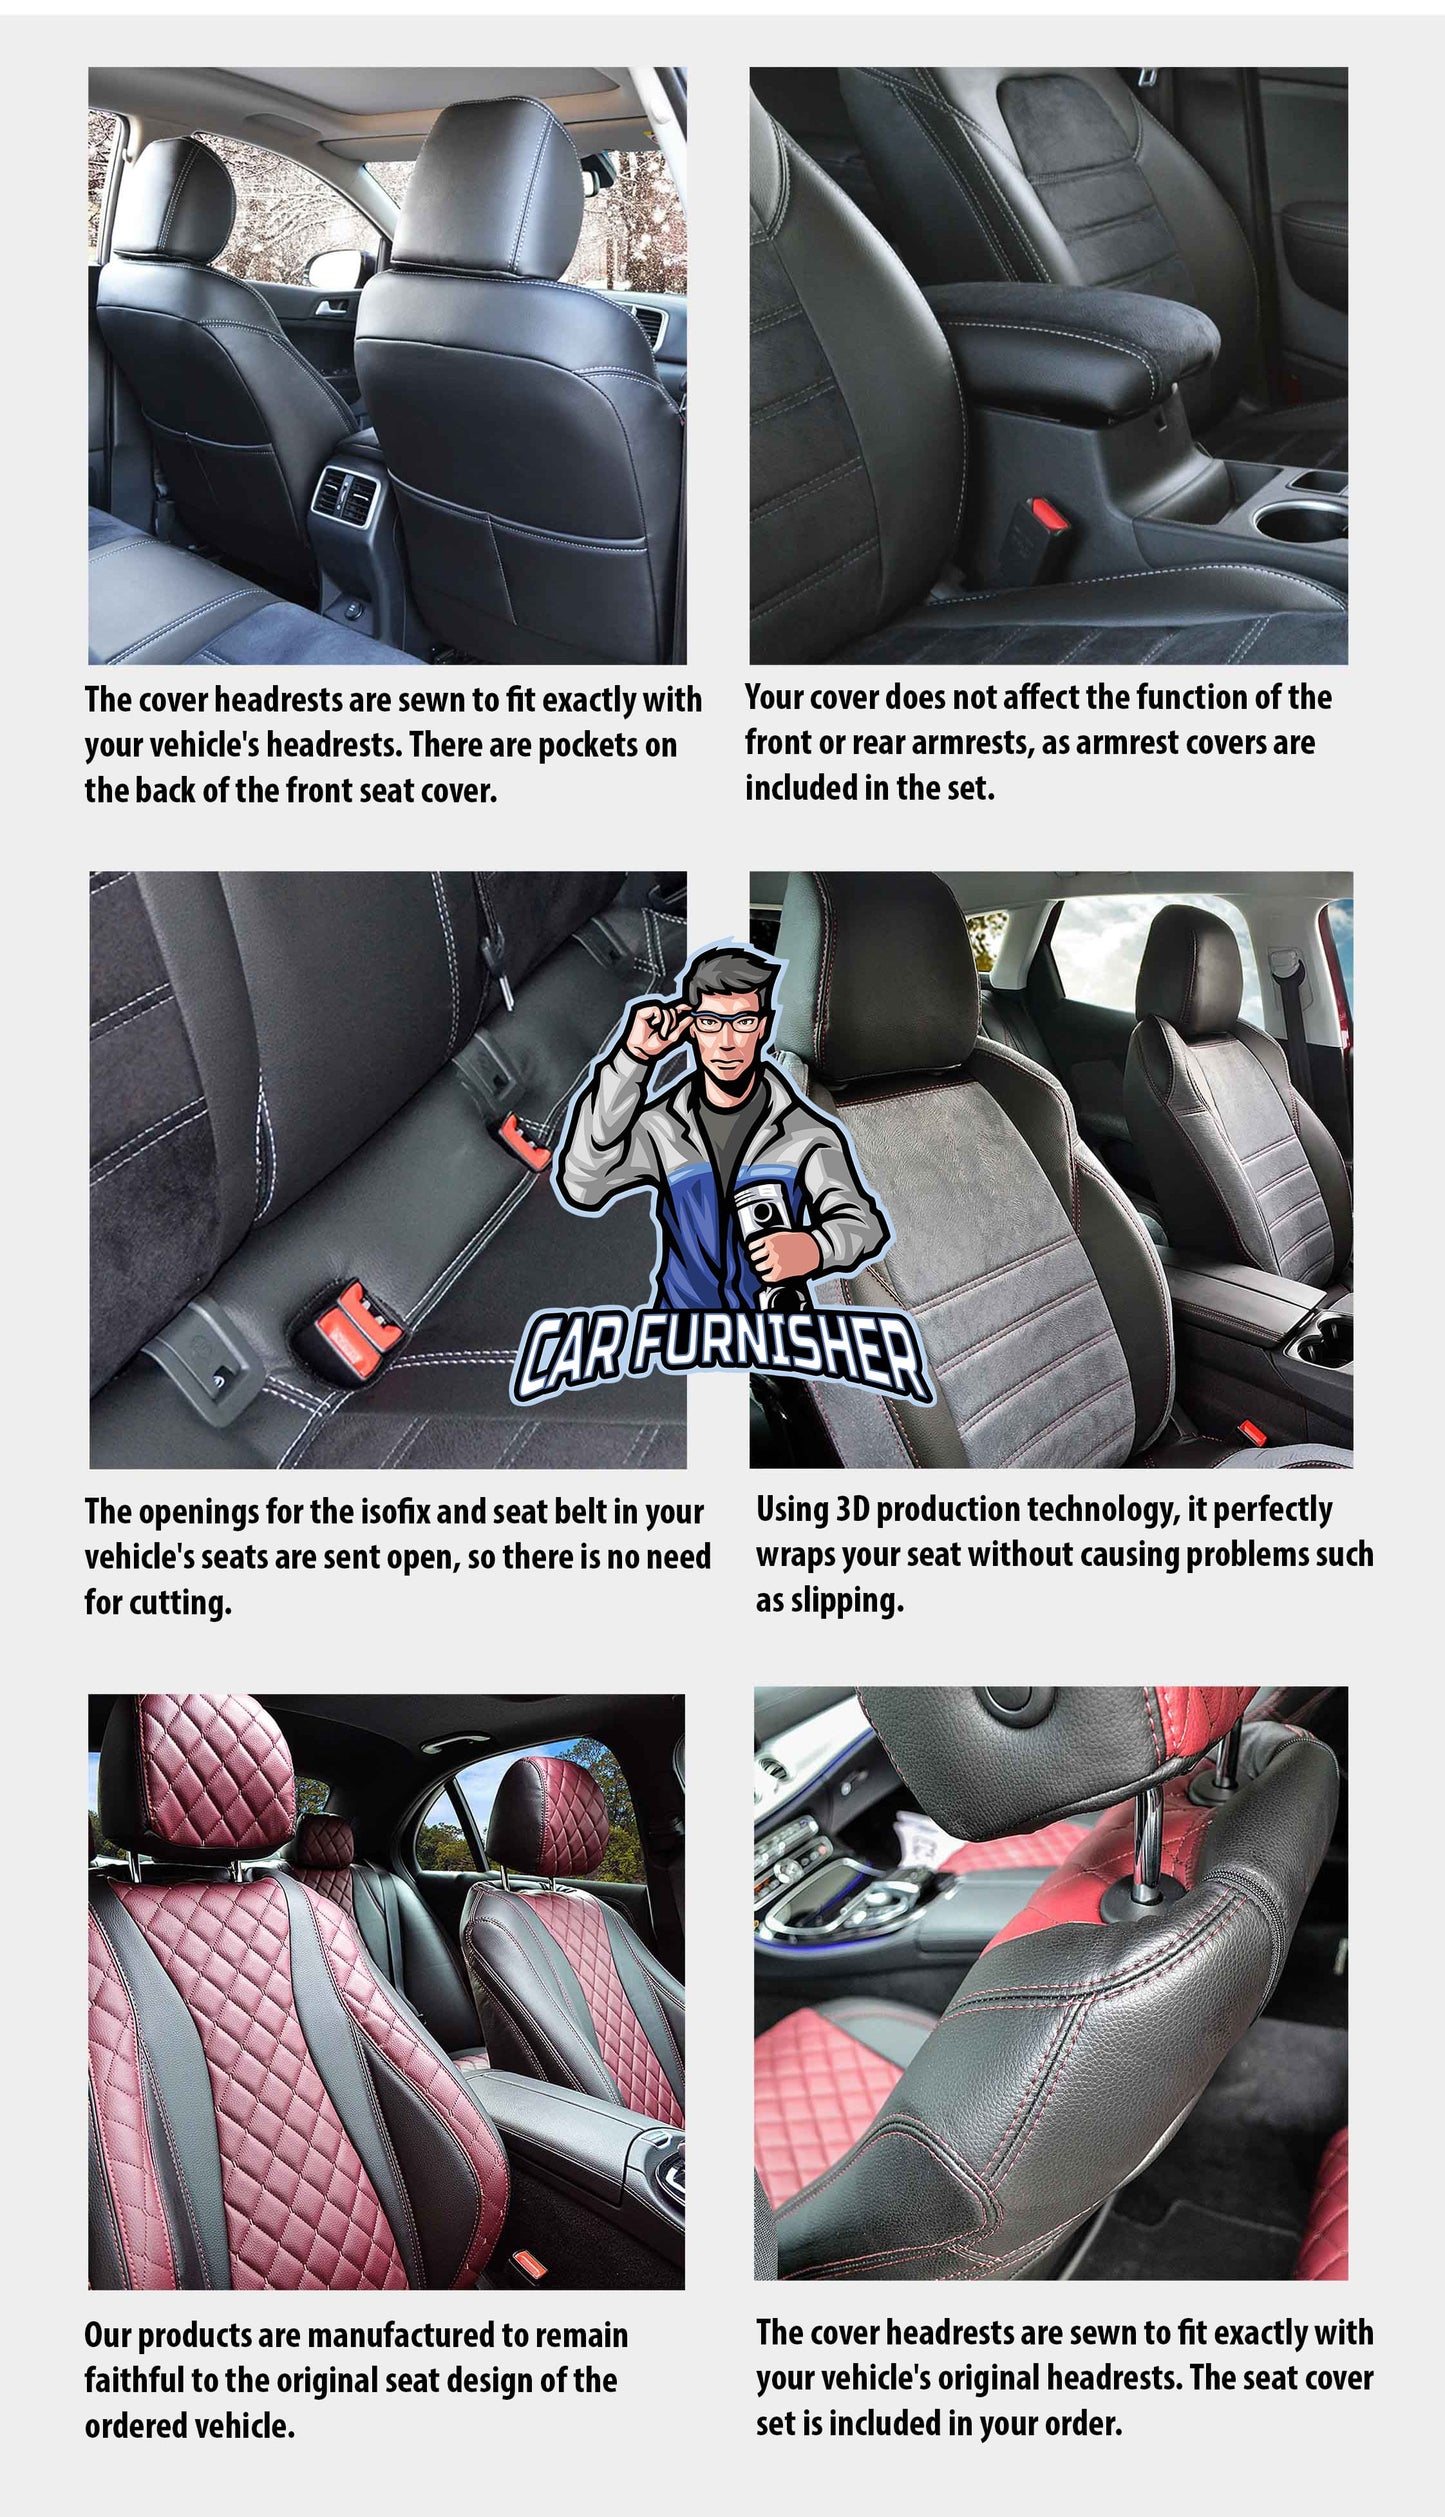 Chevrolet Tahoe Seat Covers Original Jacquard Design Smoked Jacquard Fabric